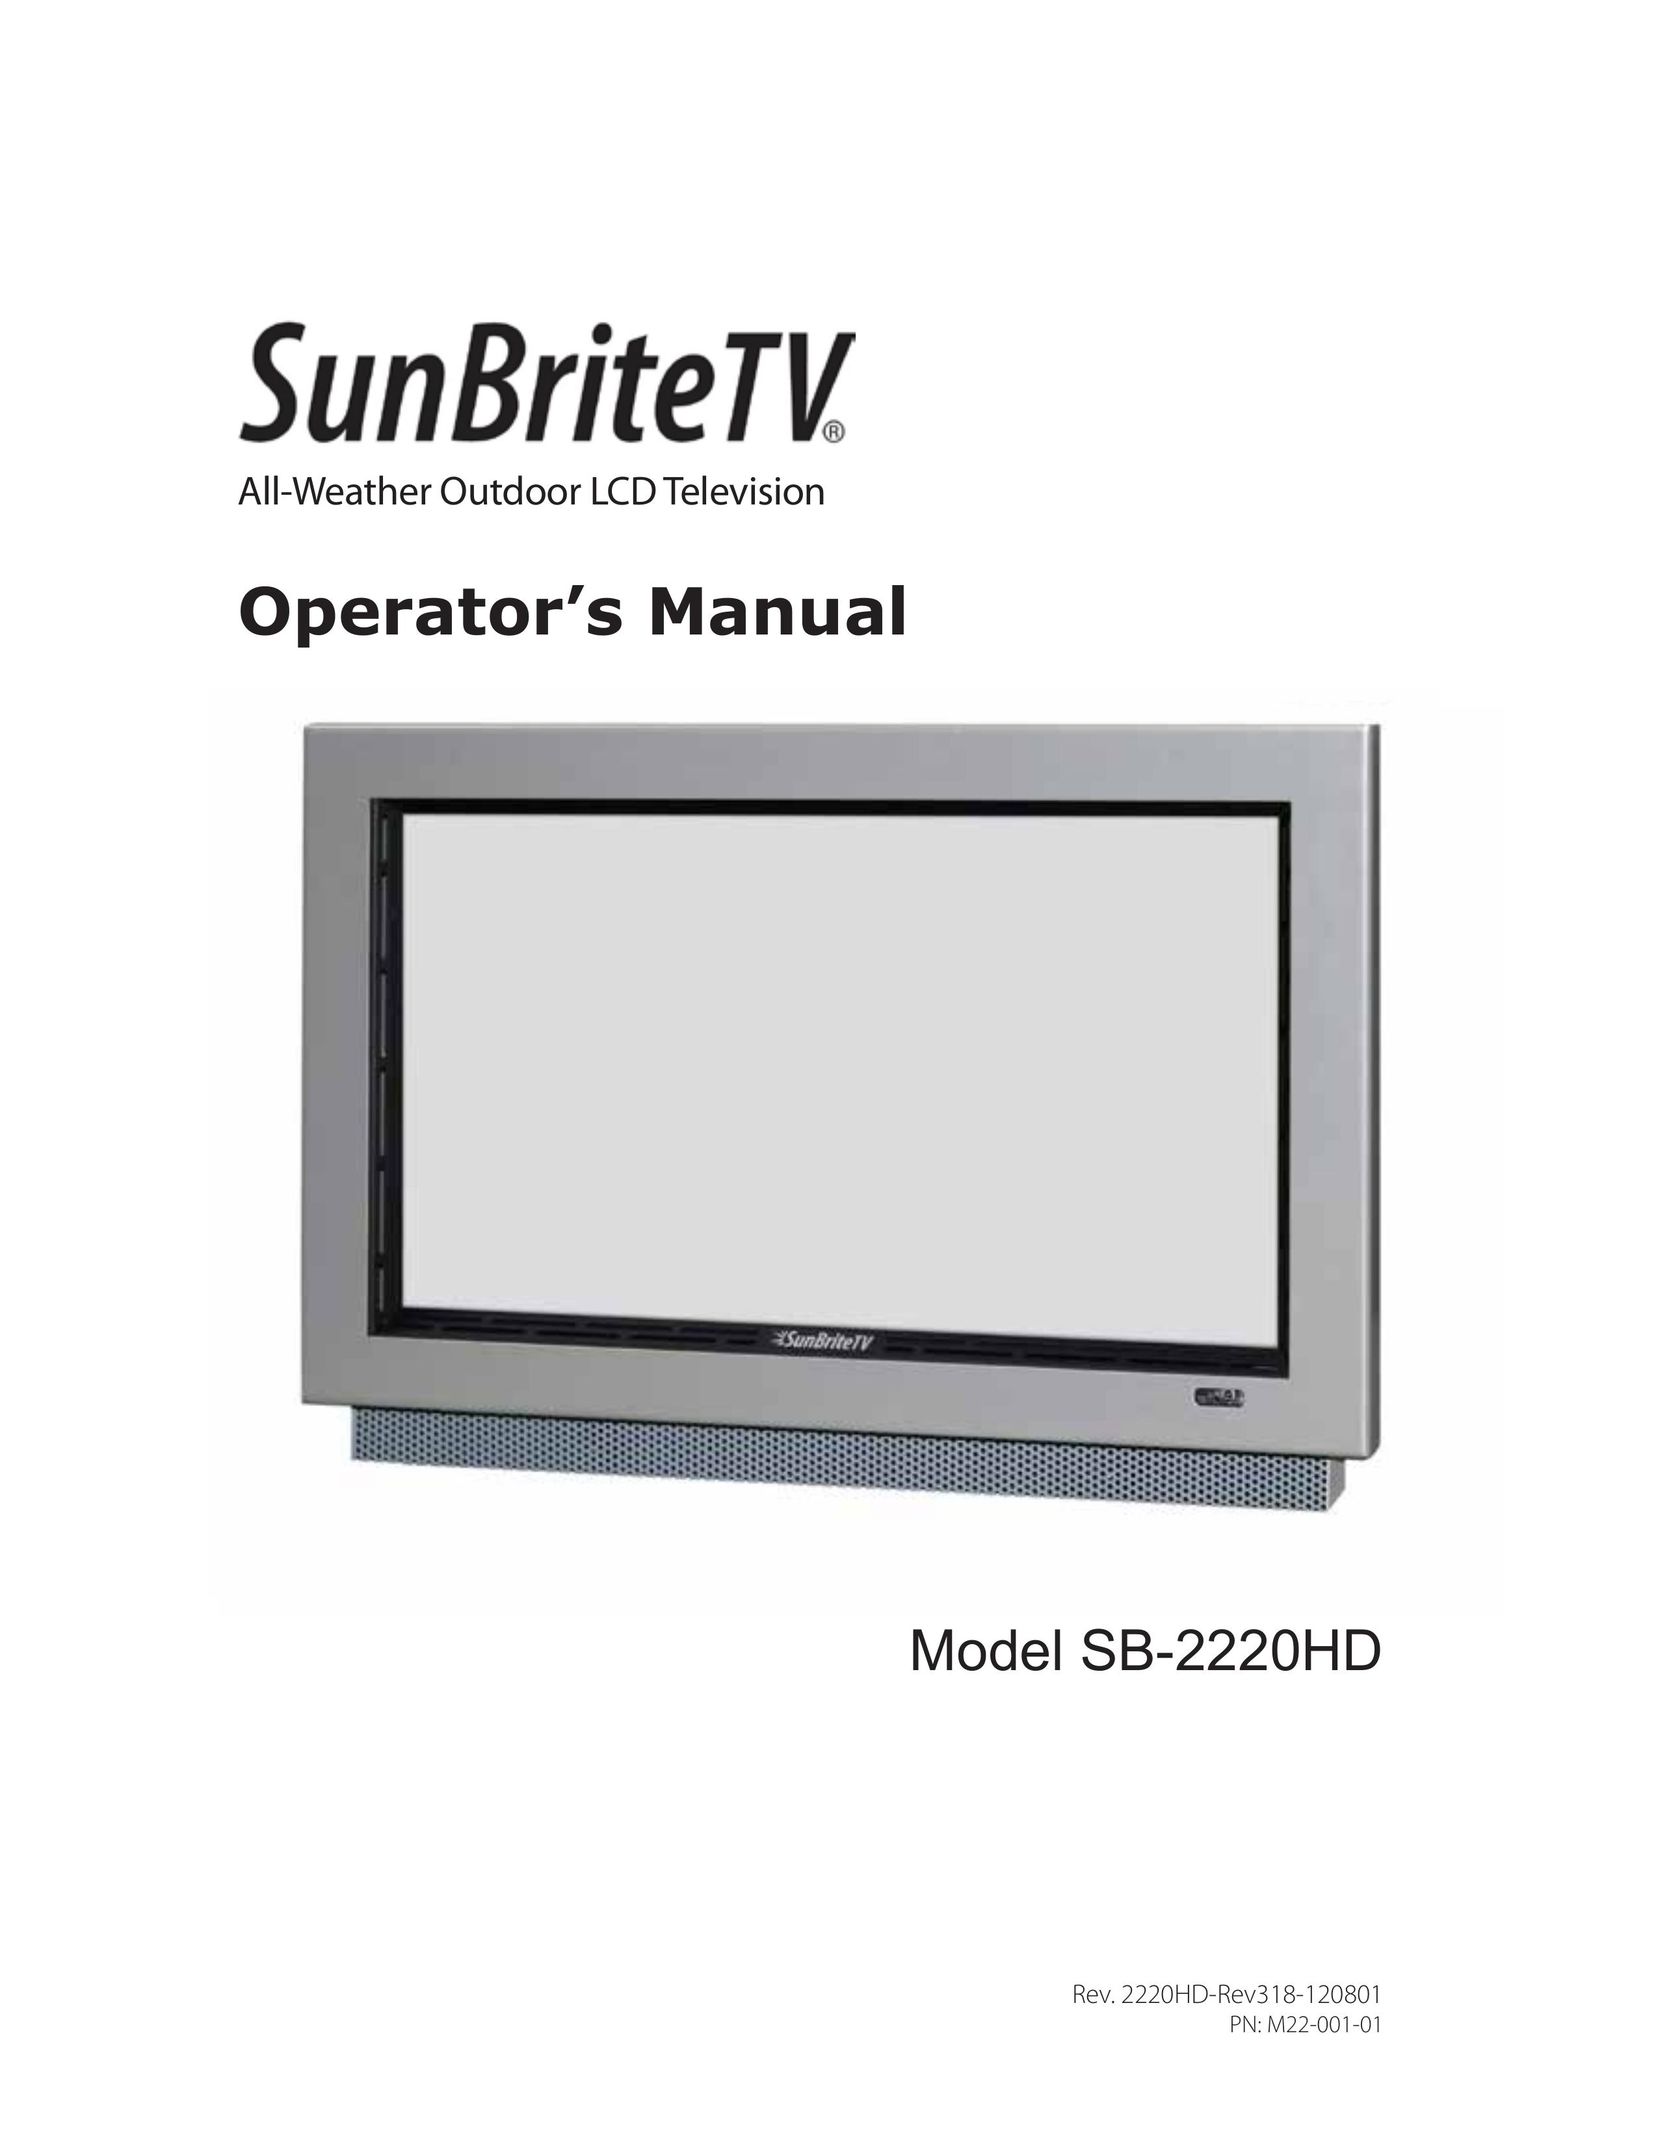 SunBriteTV SB-2220HD Car Satellite TV System User Manual